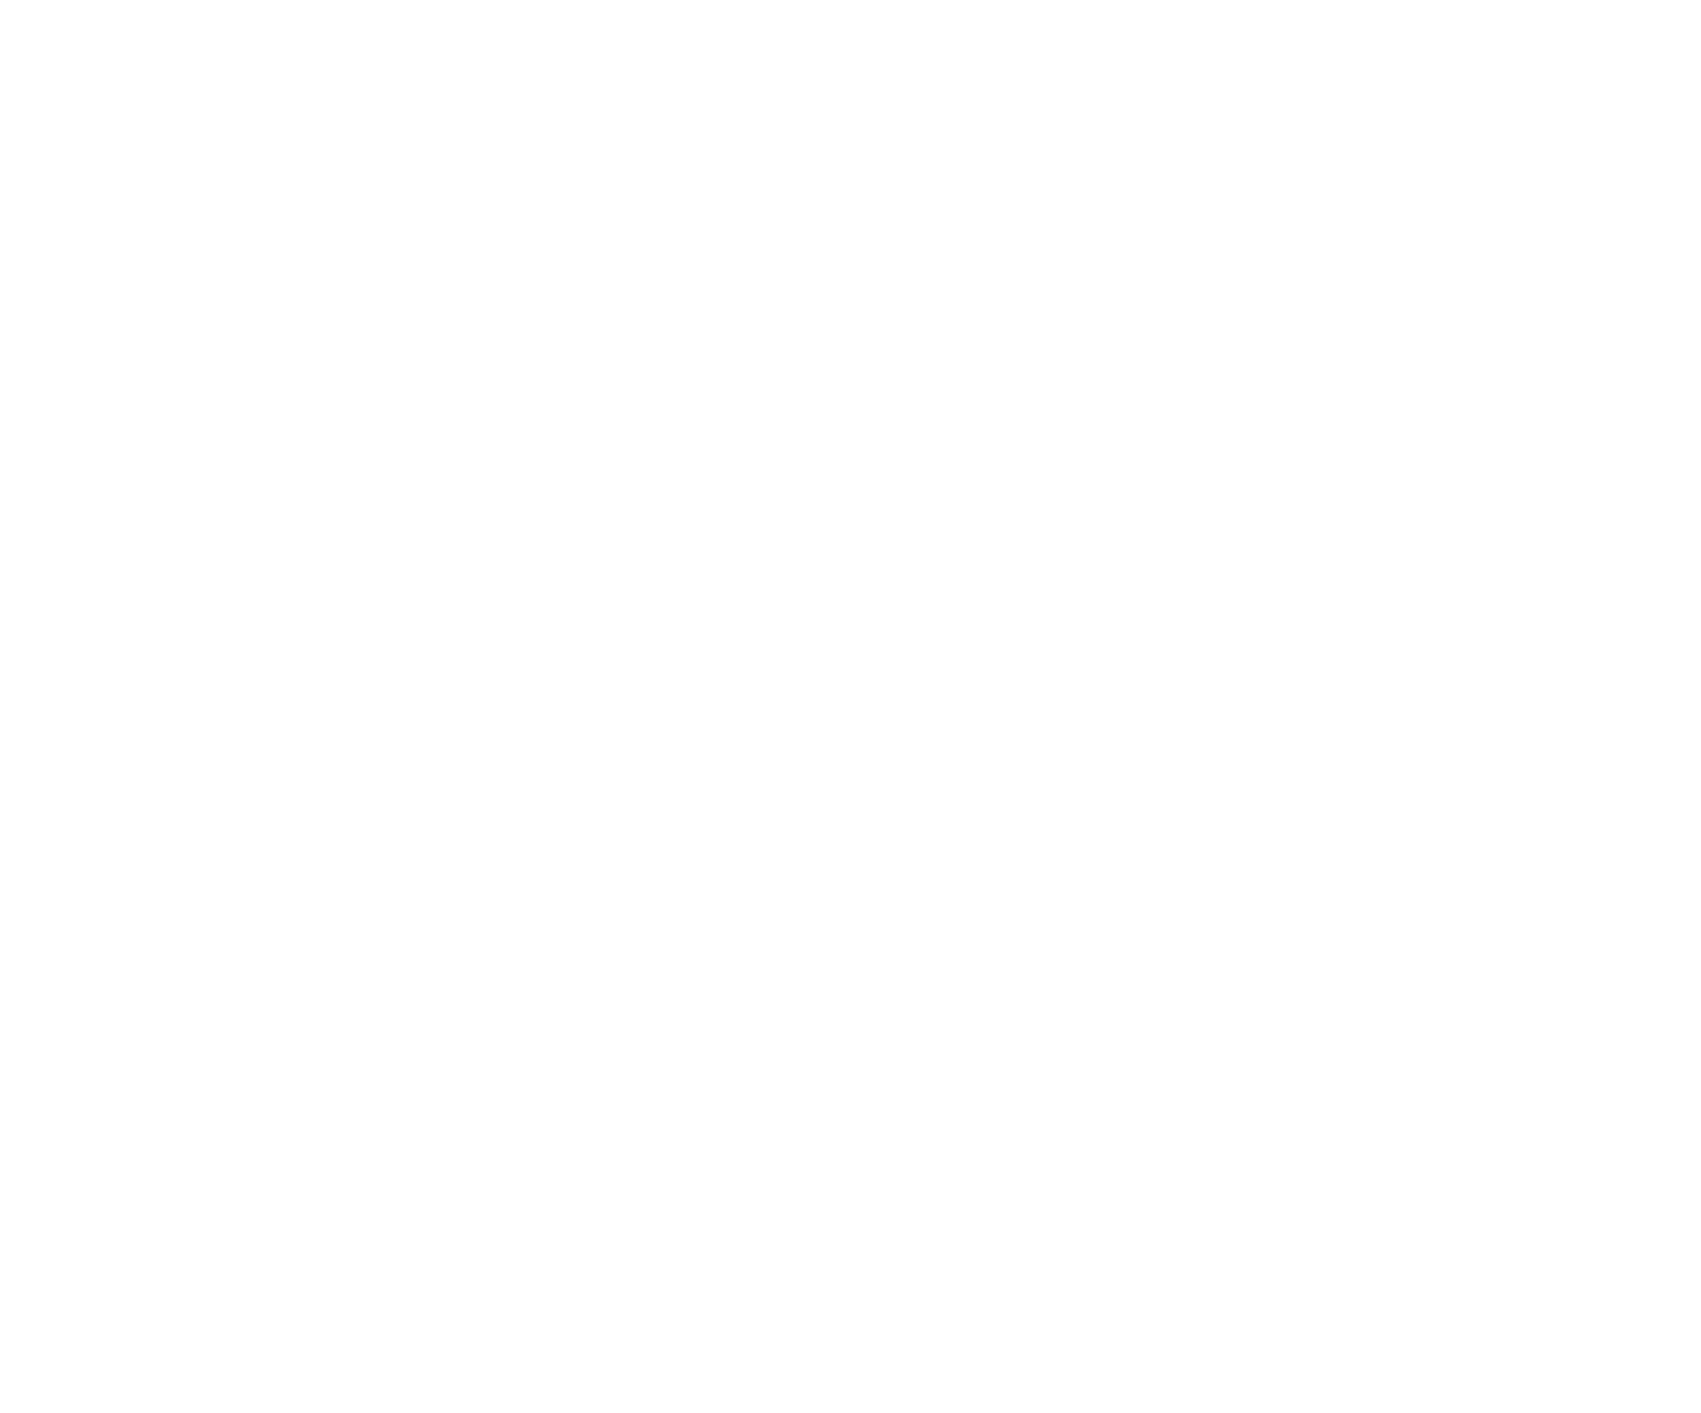 European Digital Innovation Hubs Network